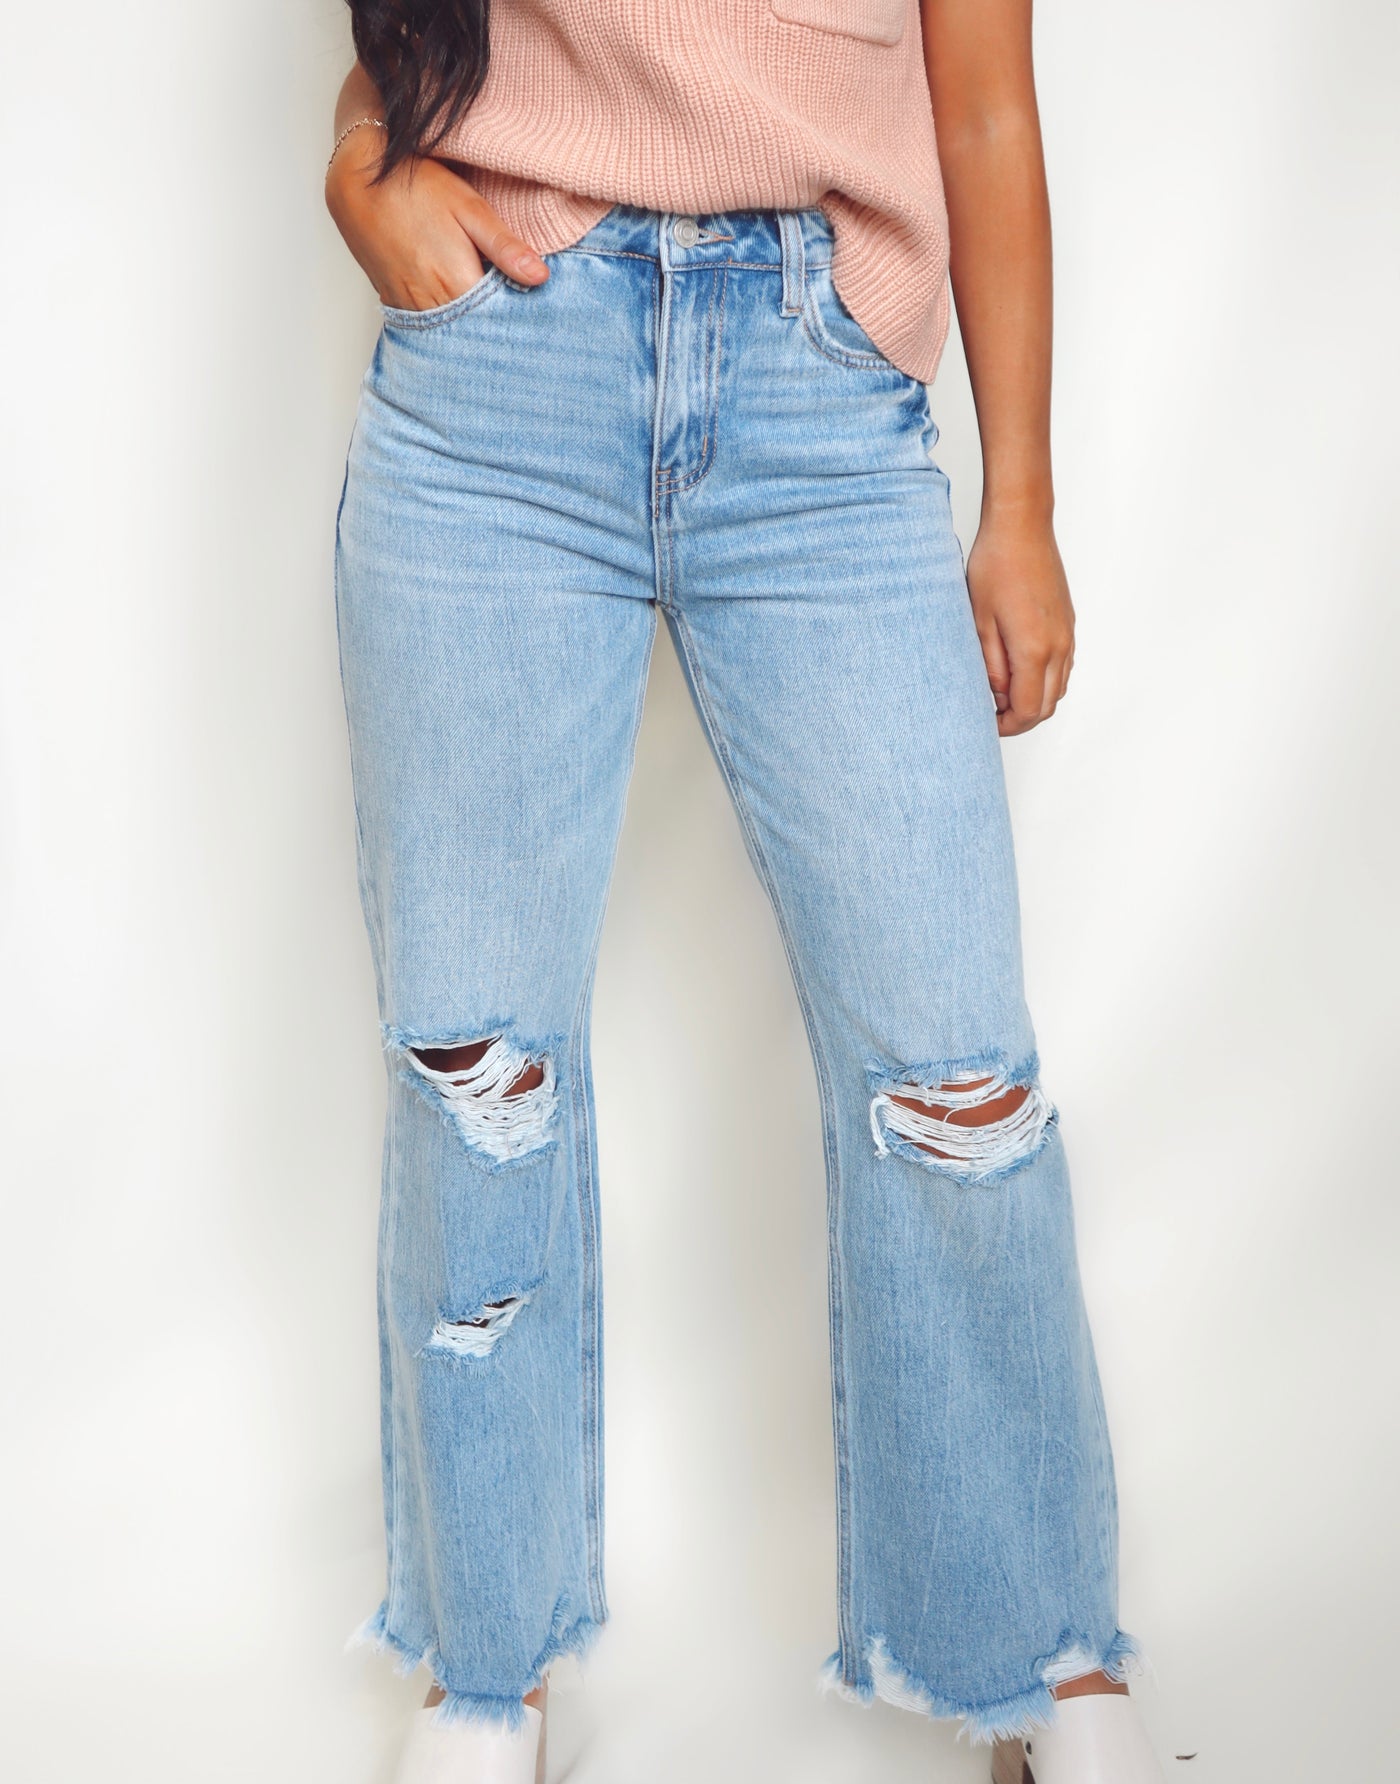 90s Vintage Distressed Jeans